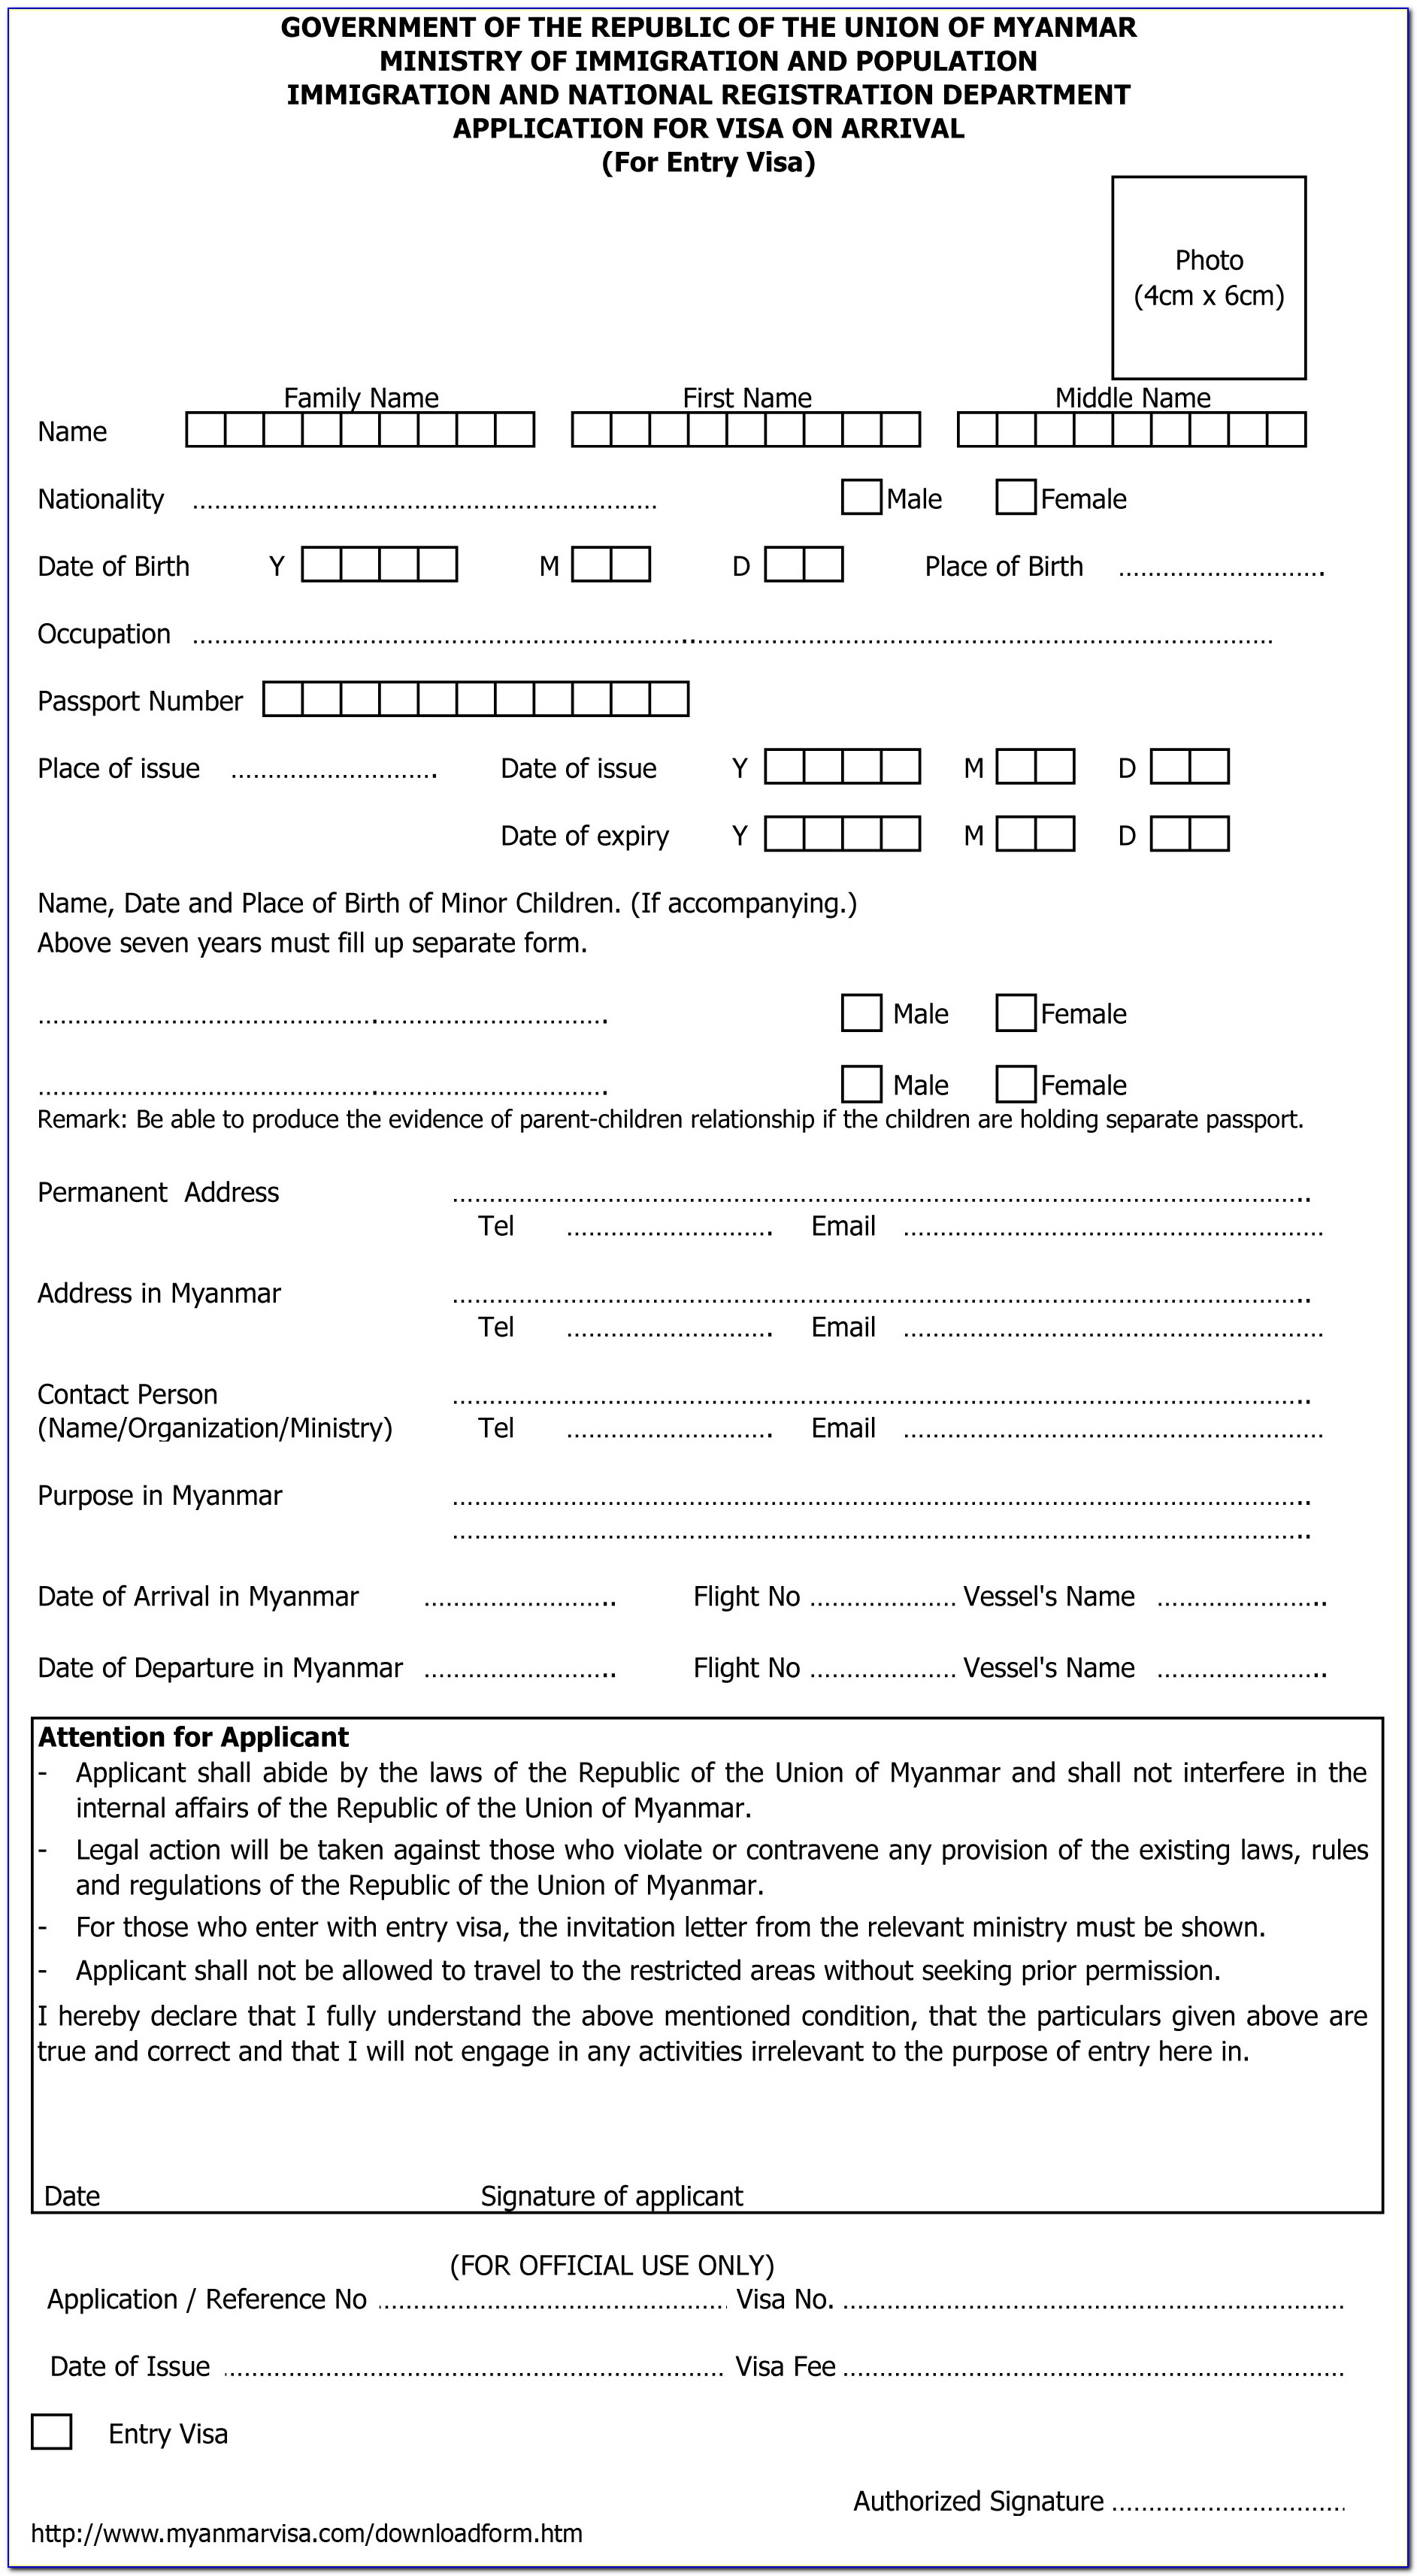 Myanmar Business Visa Application Form Pdf